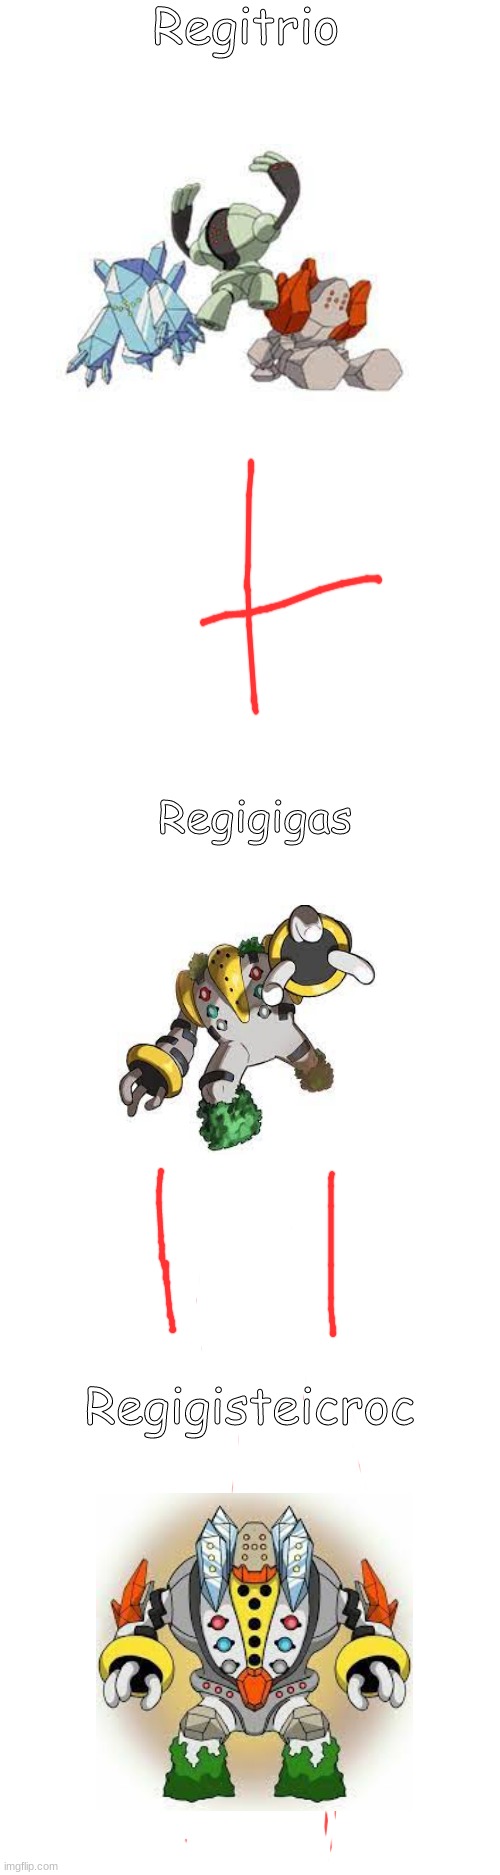 Name suggestions? | Regitrio; Regigigas; Regigisteicroc | image tagged in pokemon fusion | made w/ Imgflip meme maker